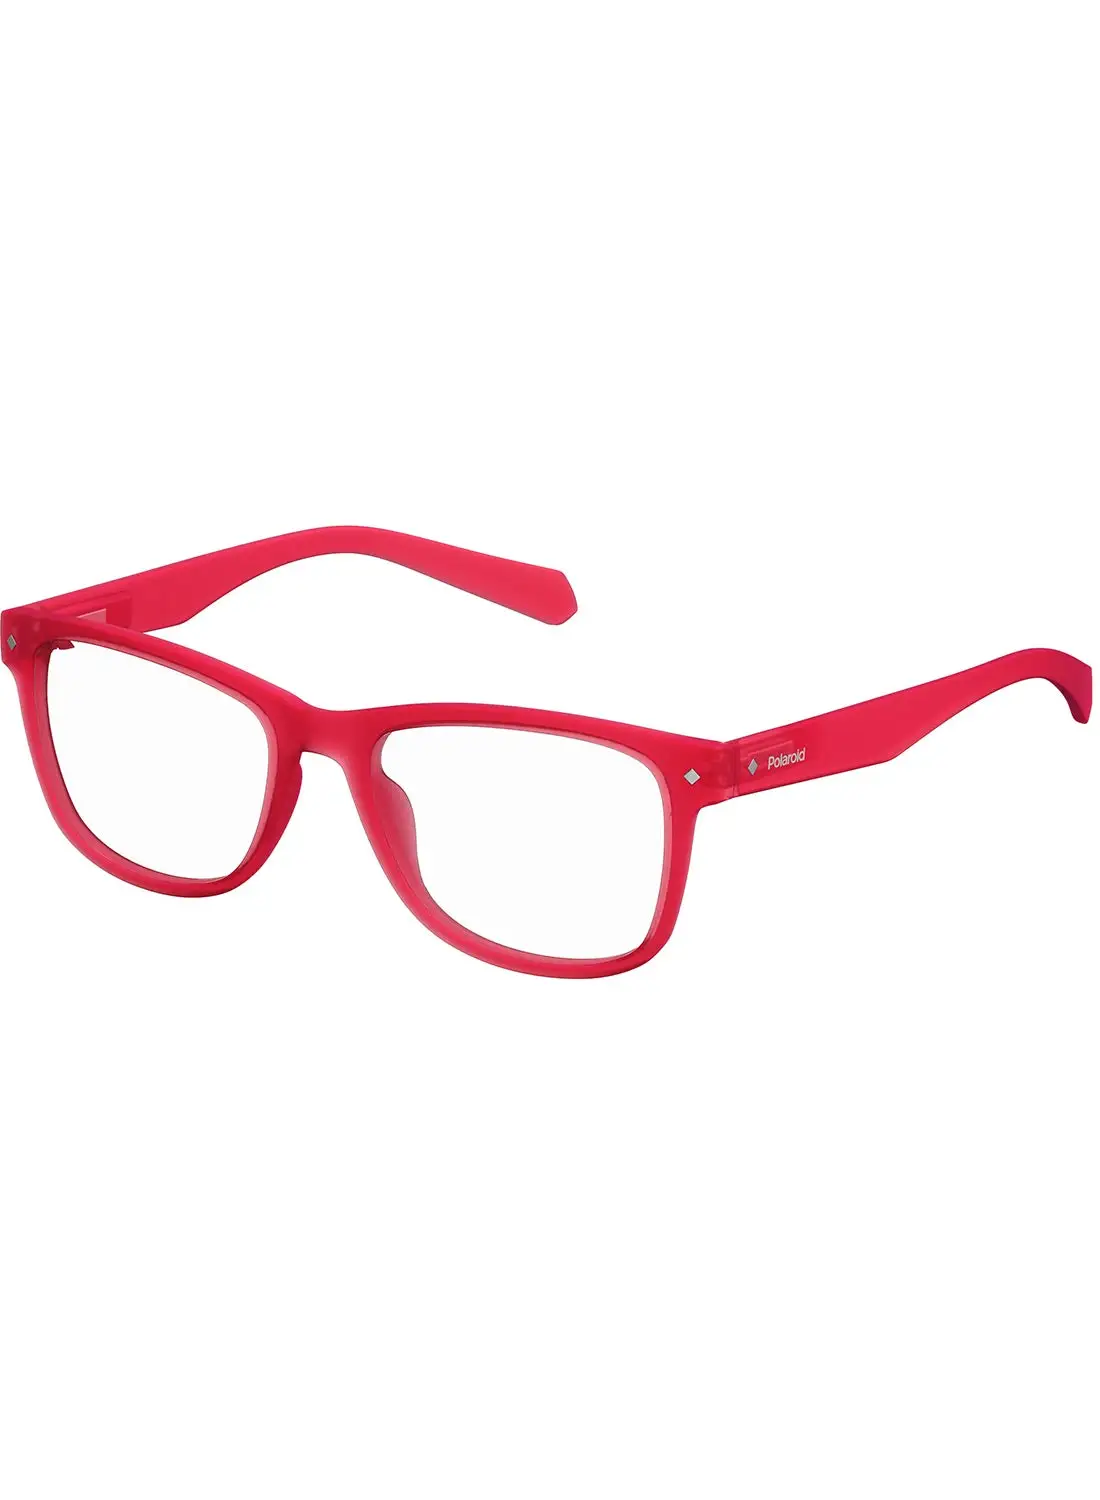 Polaroid Unisex Square Reading Glasses - Pld 0020/R Red 52 - Lens Size: 52 Mm